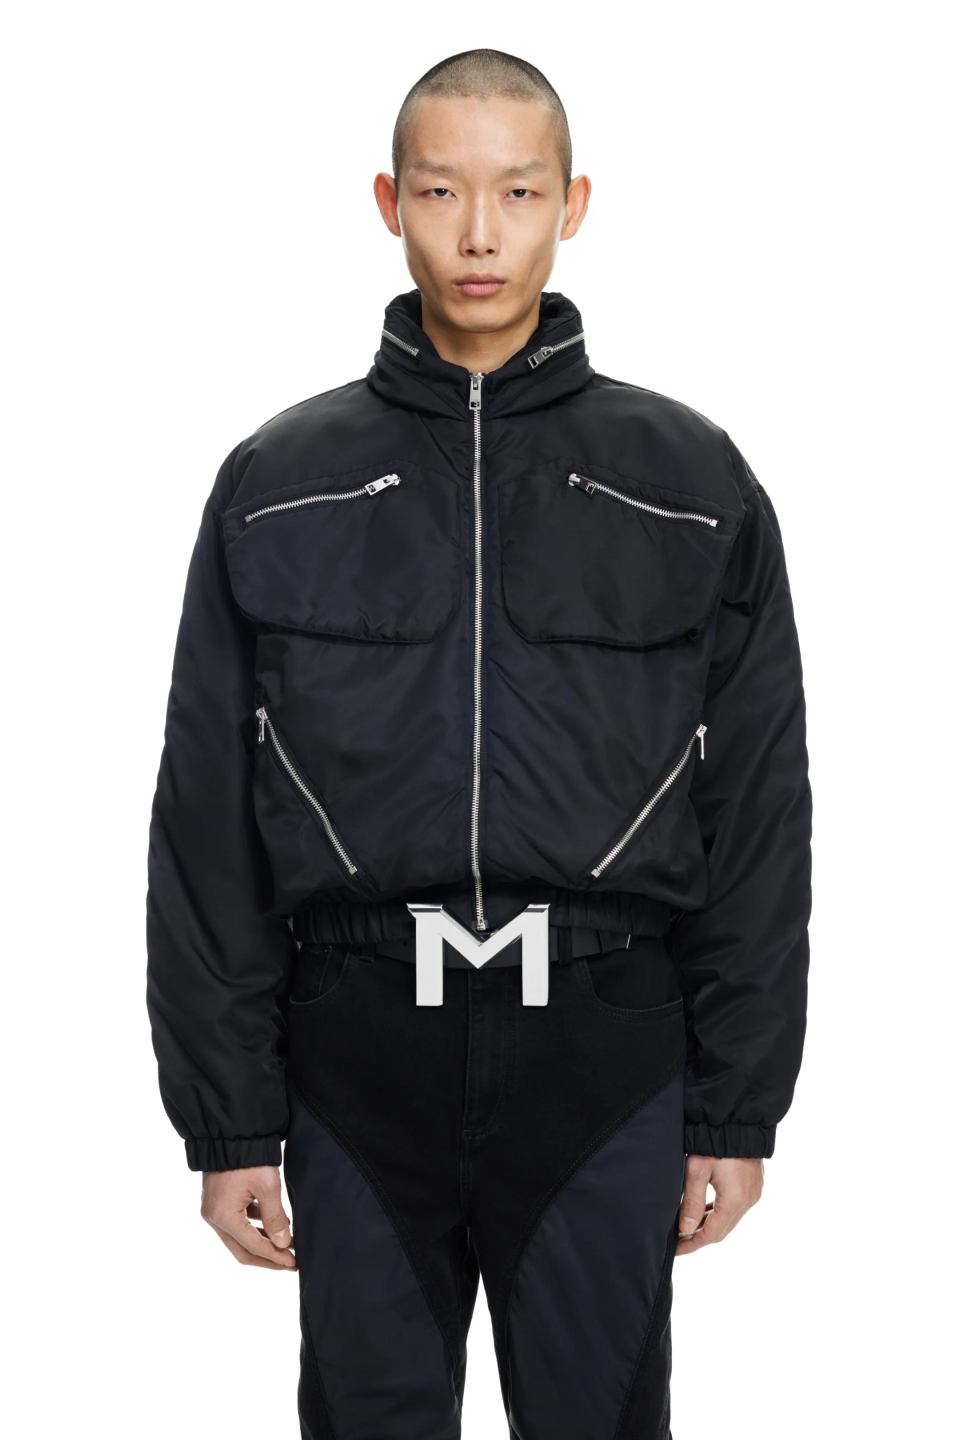 Mugler x H&M Men's Nylon Parachute Jacket